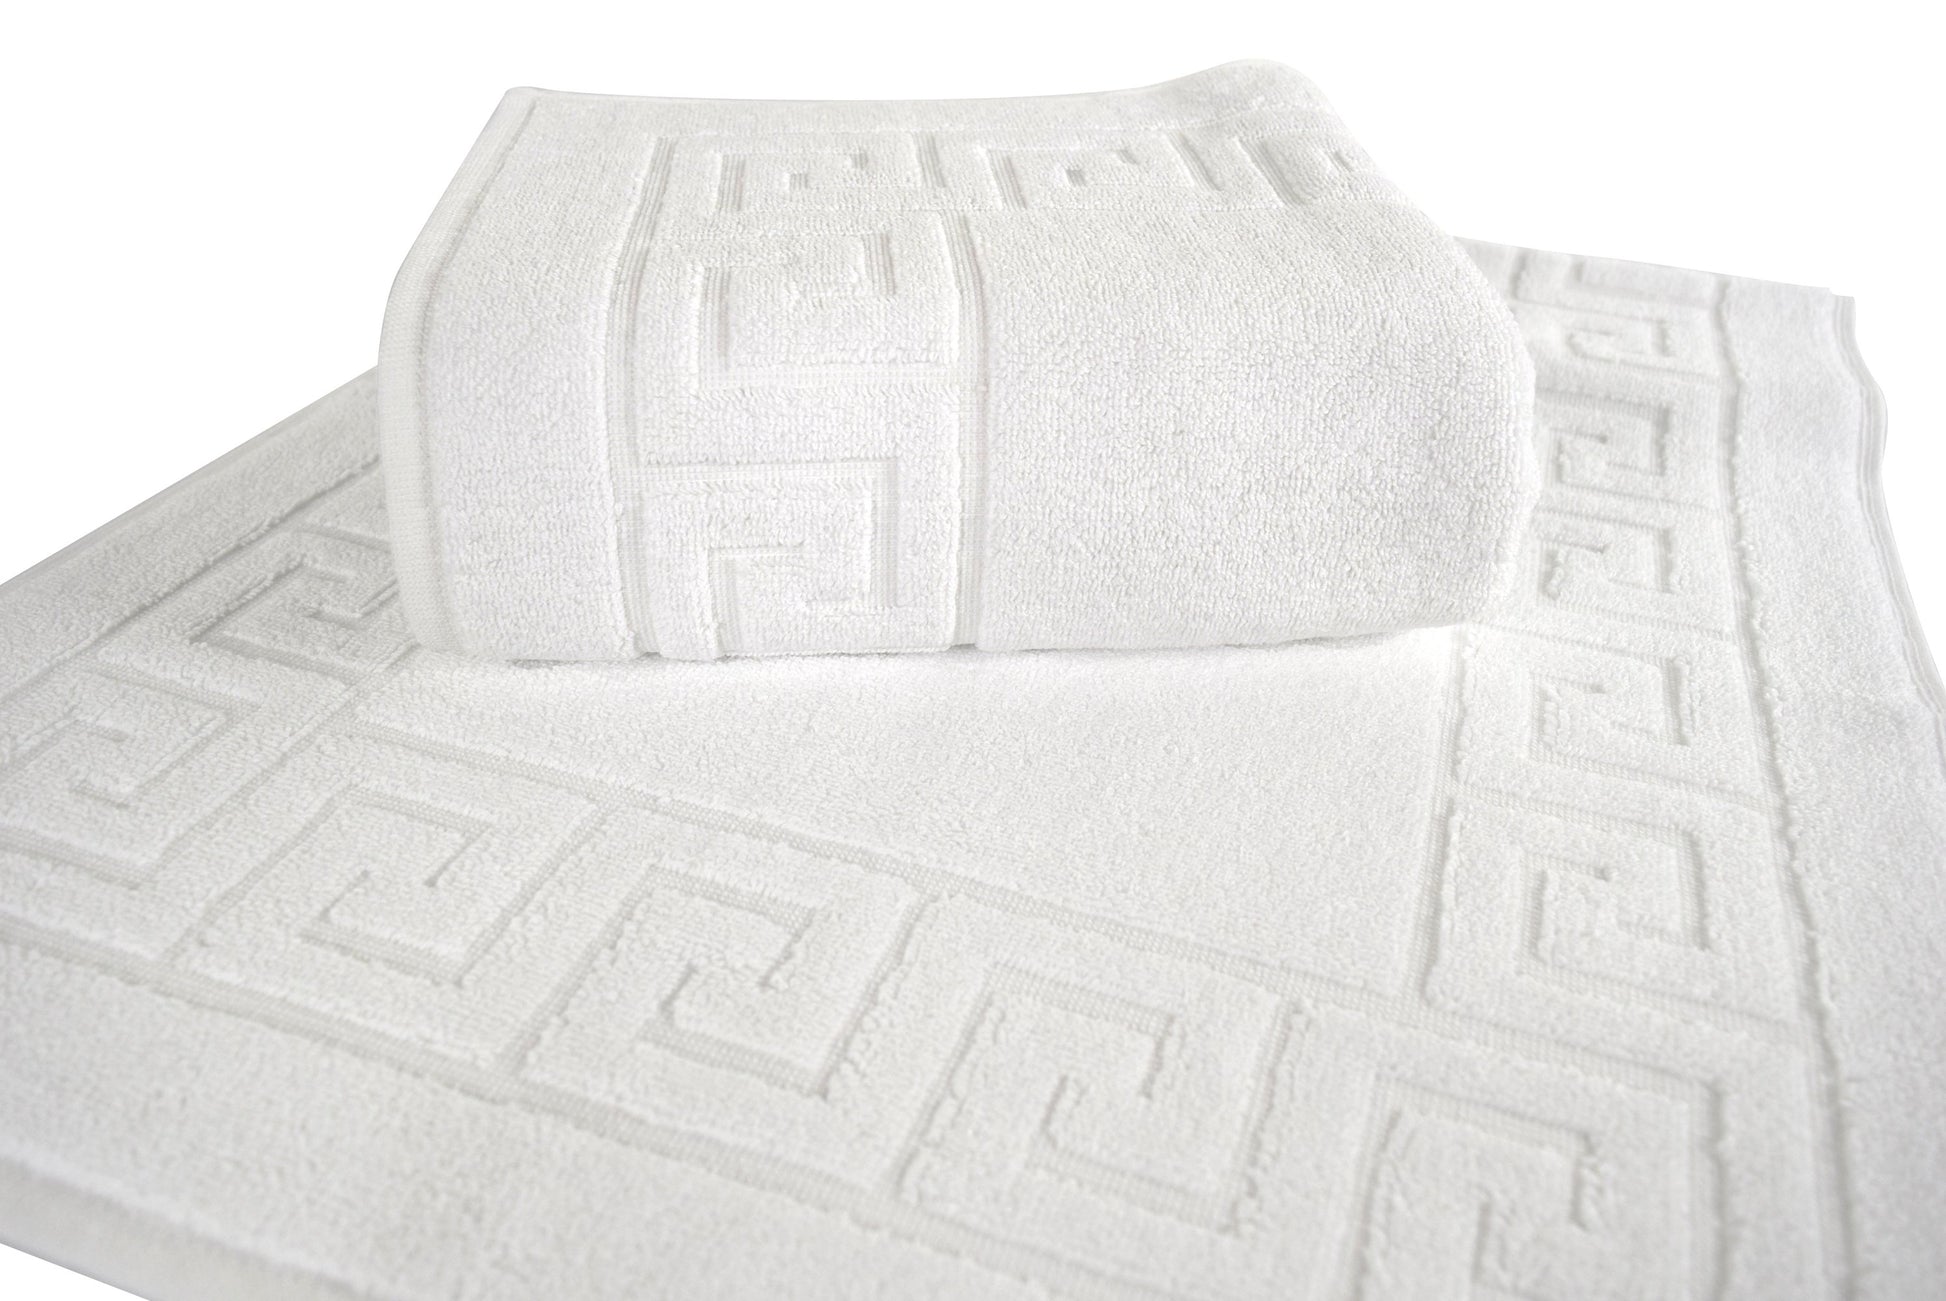 White Classic Luxury Bath Mat Towel Set, Absorbent Cotton Hotel